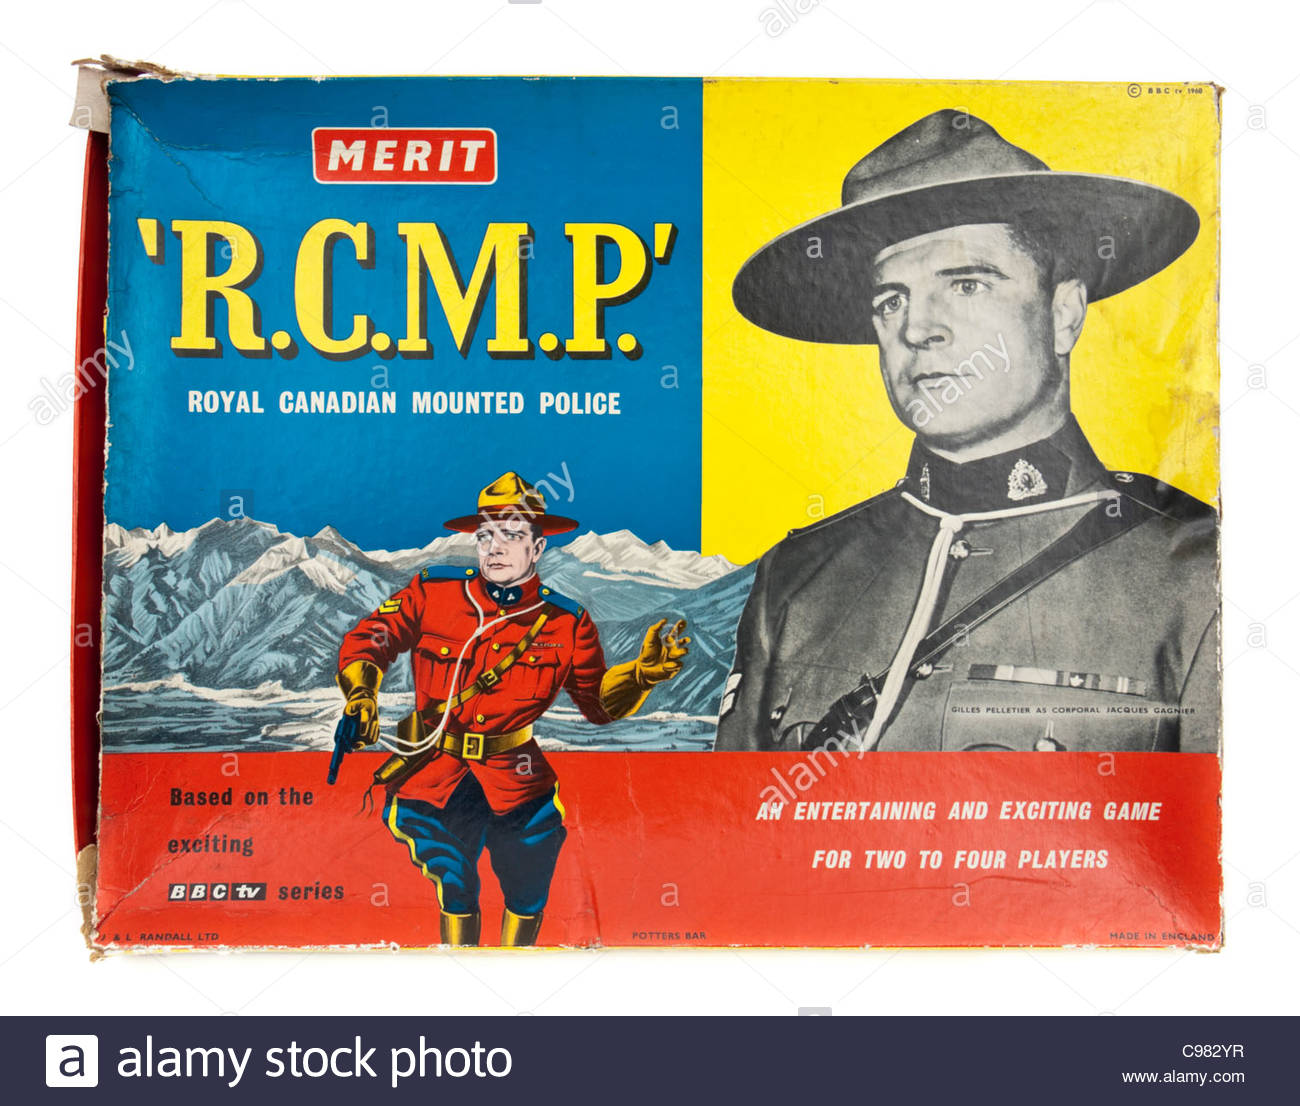 vintage-1960s-rcmp-royal-canadian-mounted-police-board-game-by-merit-C982YR.jpg